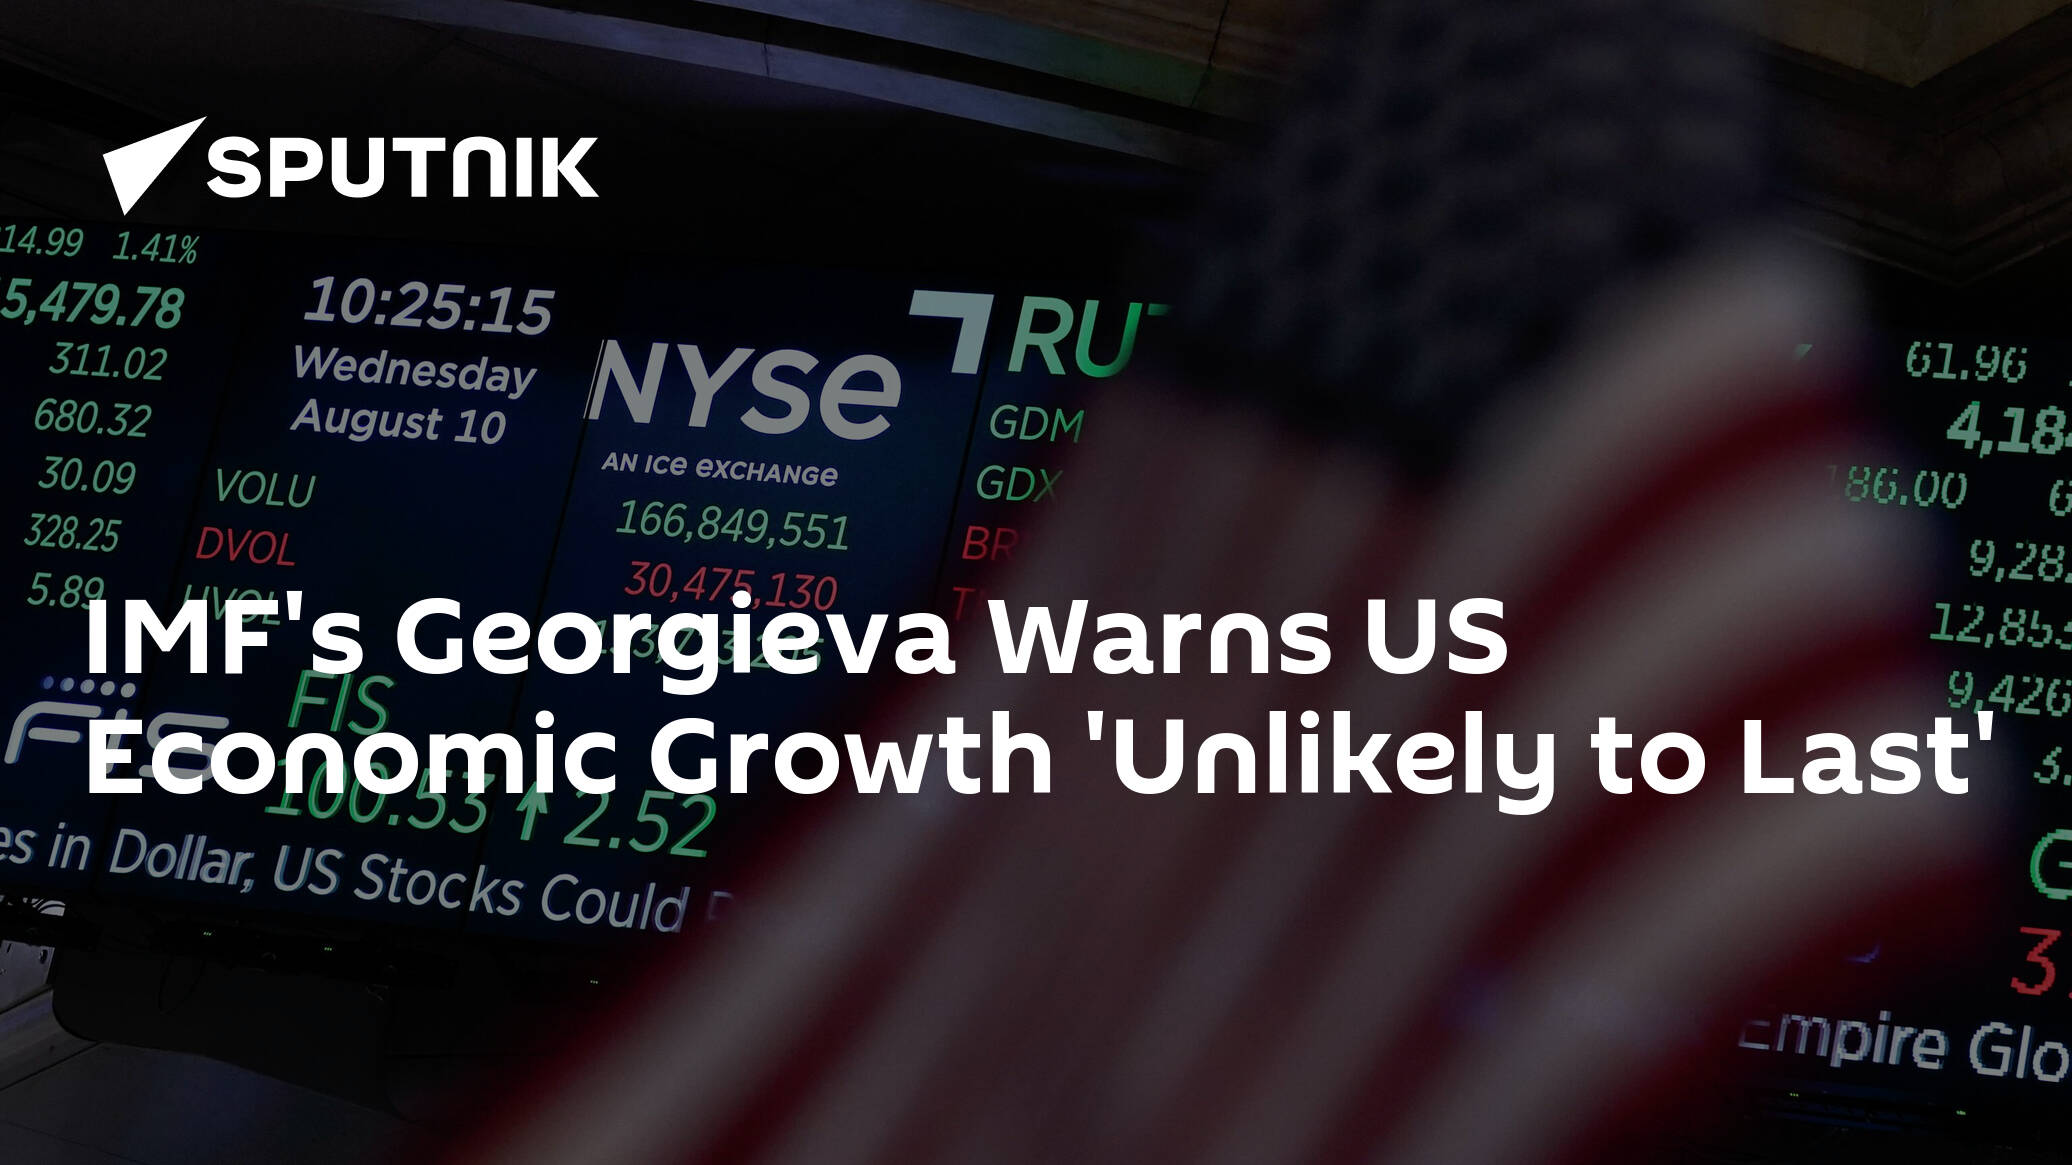 IMF's Georgieva Warns US Economic Growth 'Unlikely to Last'